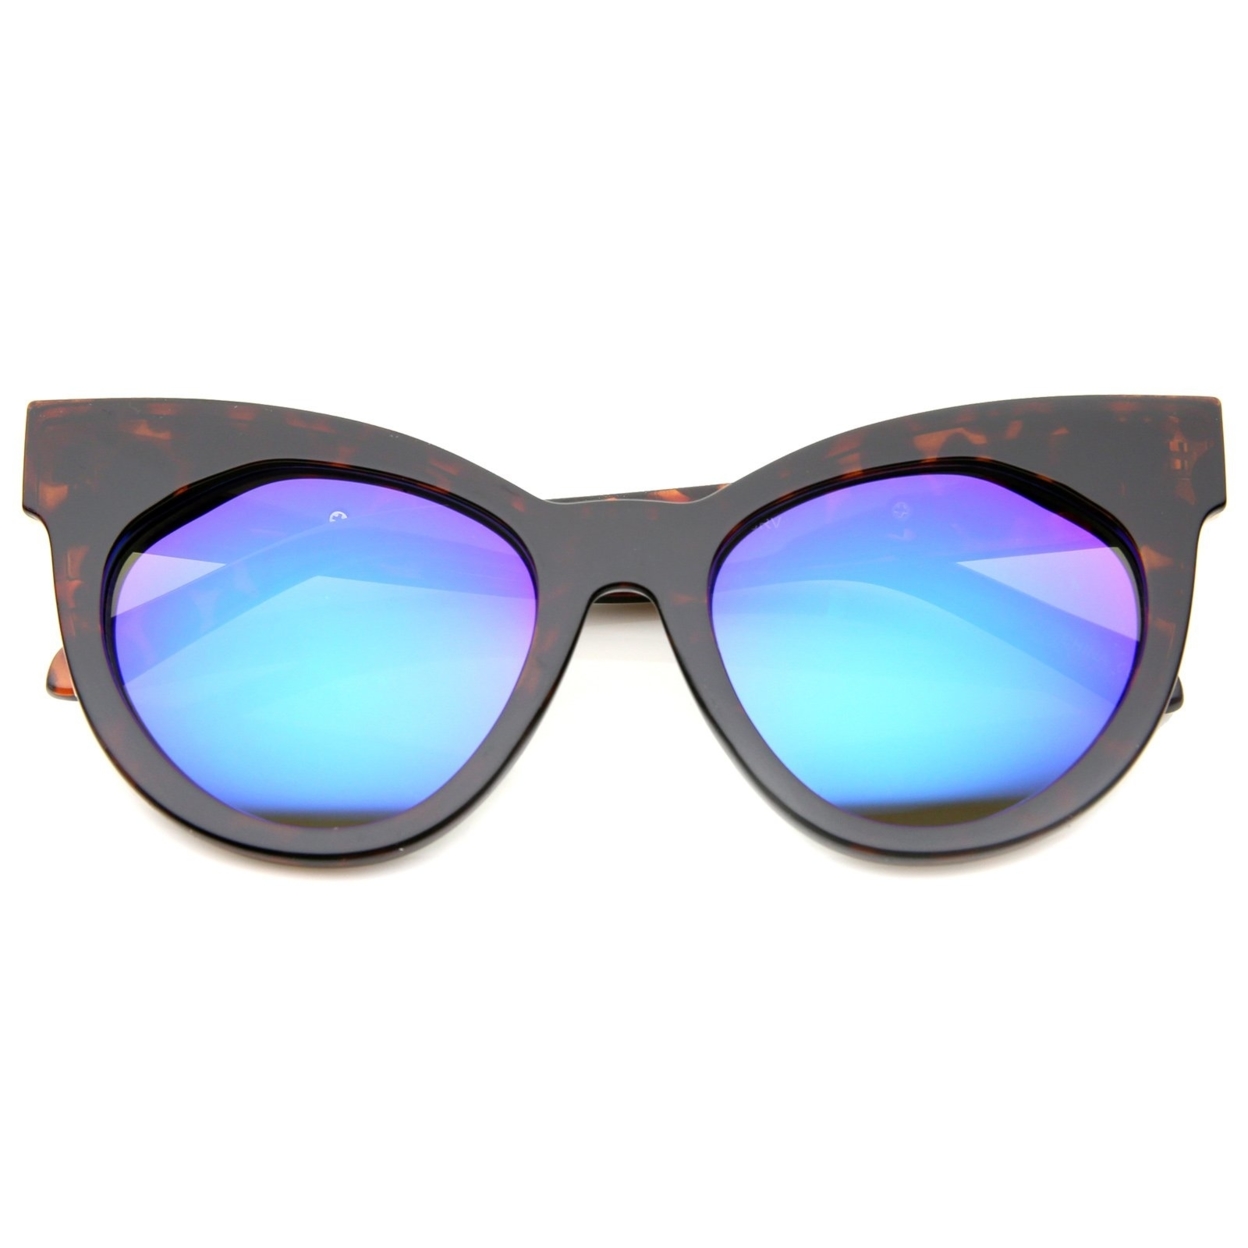 Women's Oversize Chunky Frame Iridescent Lens Cat Eye Sunglasses 55mm - Tortoise / Pink Yellow Mirror